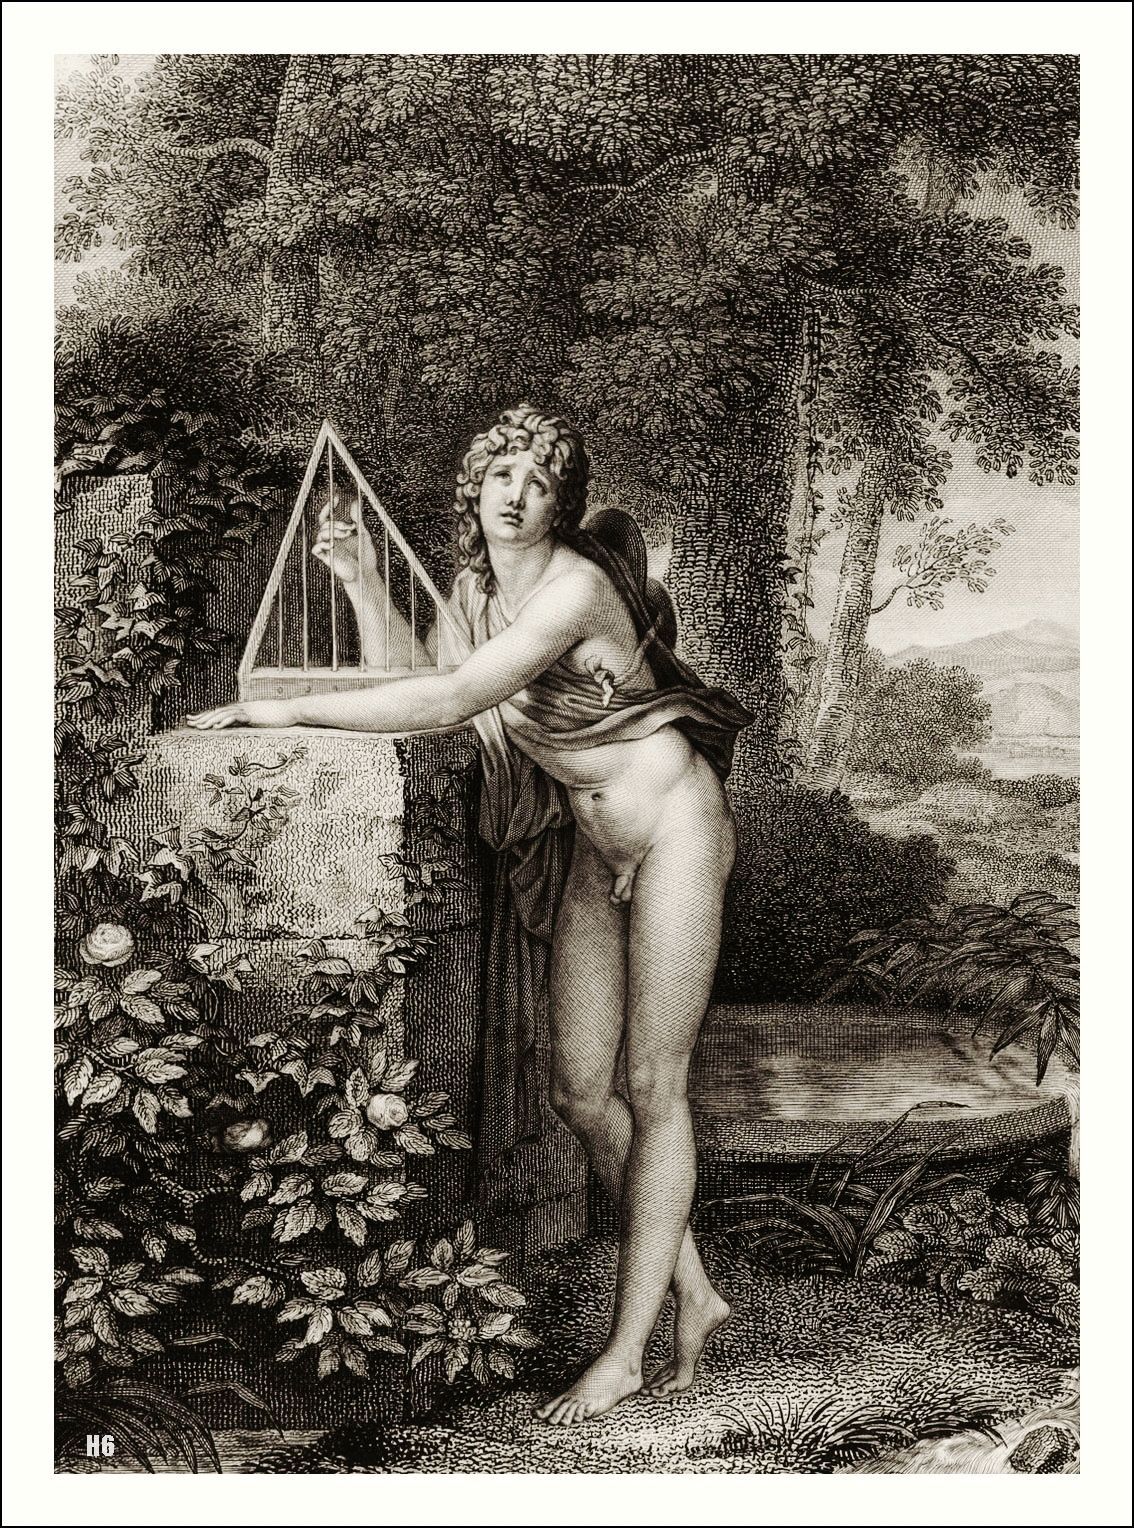 Illustration from Virgil&#8217;s Aeneid. 1829.  Anne Louis de Roussy Trioson. French 1767-1824. engraving.
http://hadrian6.tumblr.com